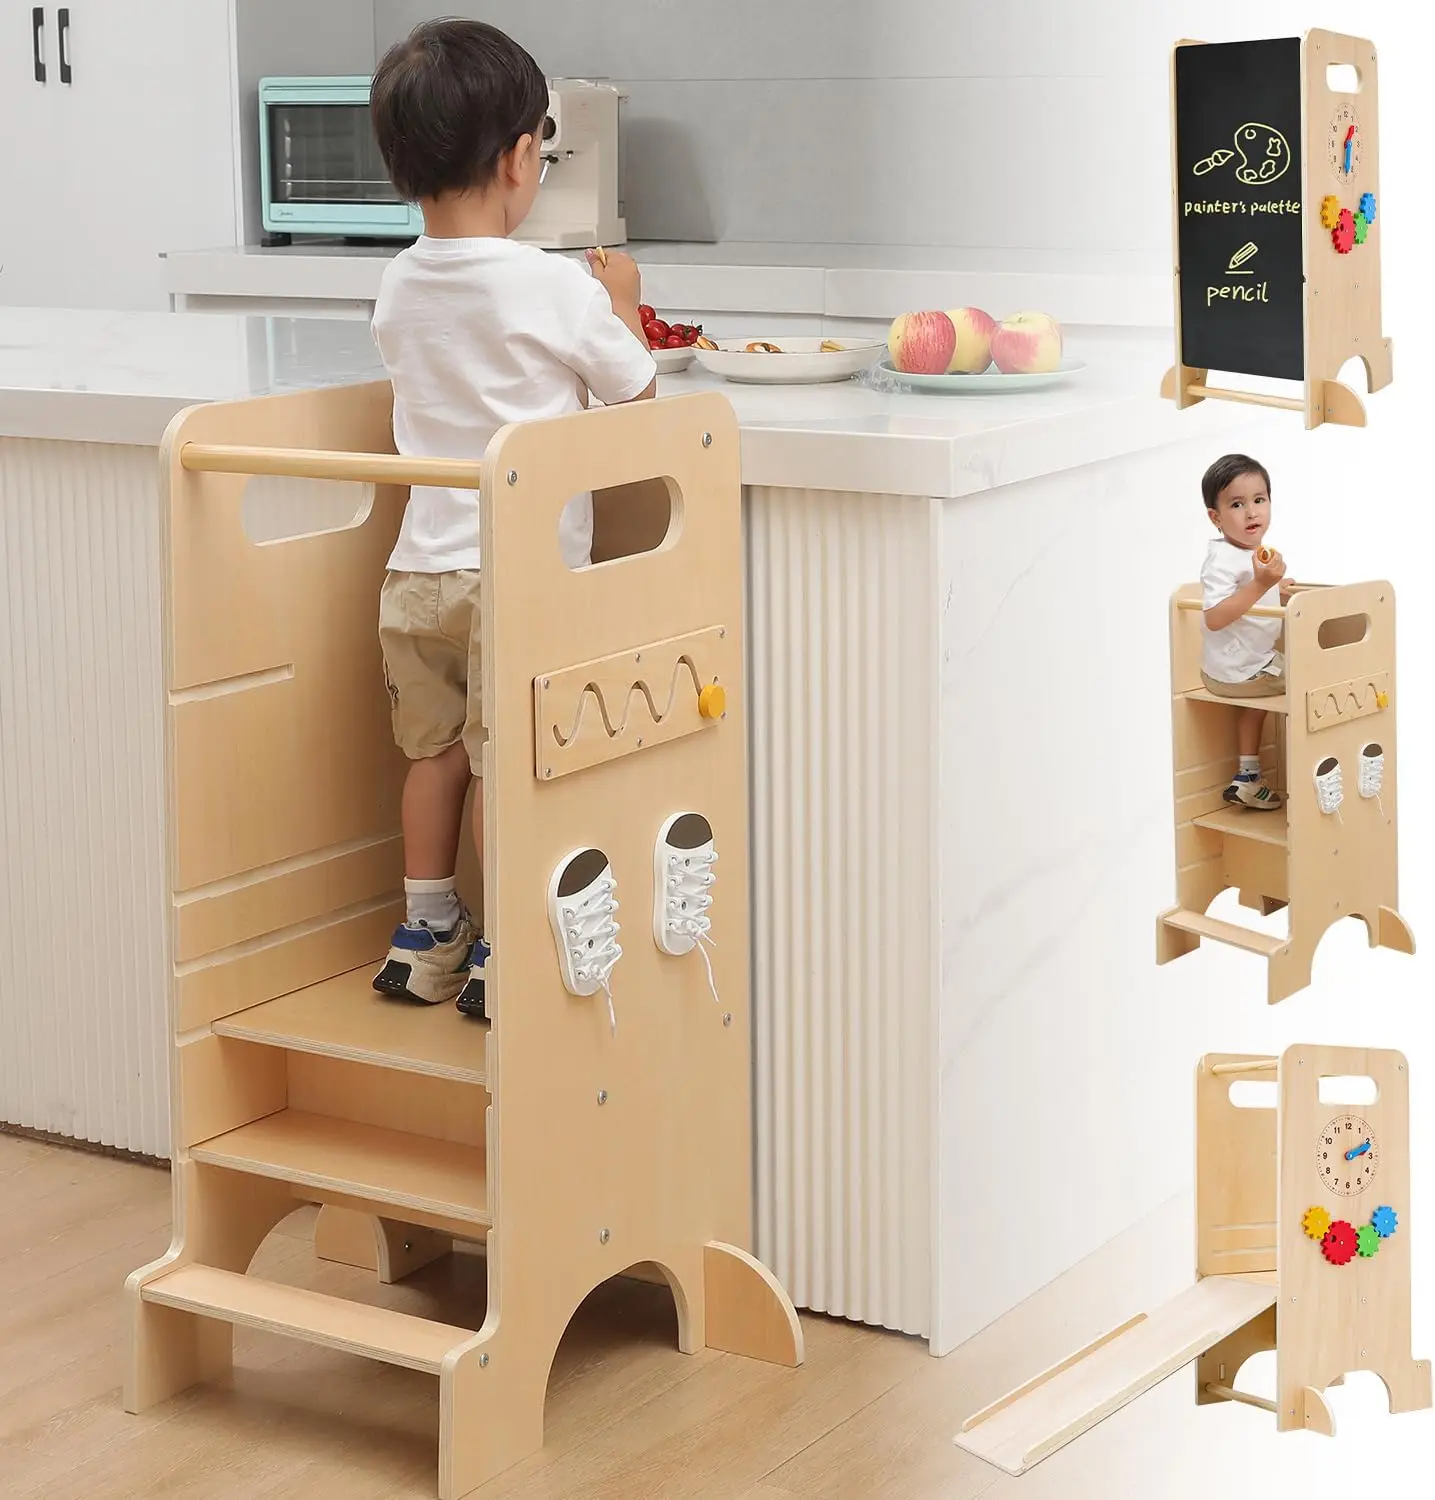 

Toddler Kitchen Stool Helper Adjustable Standing Tower for Kitchen Counter with Slide, Chalkboard, Montessori Activities